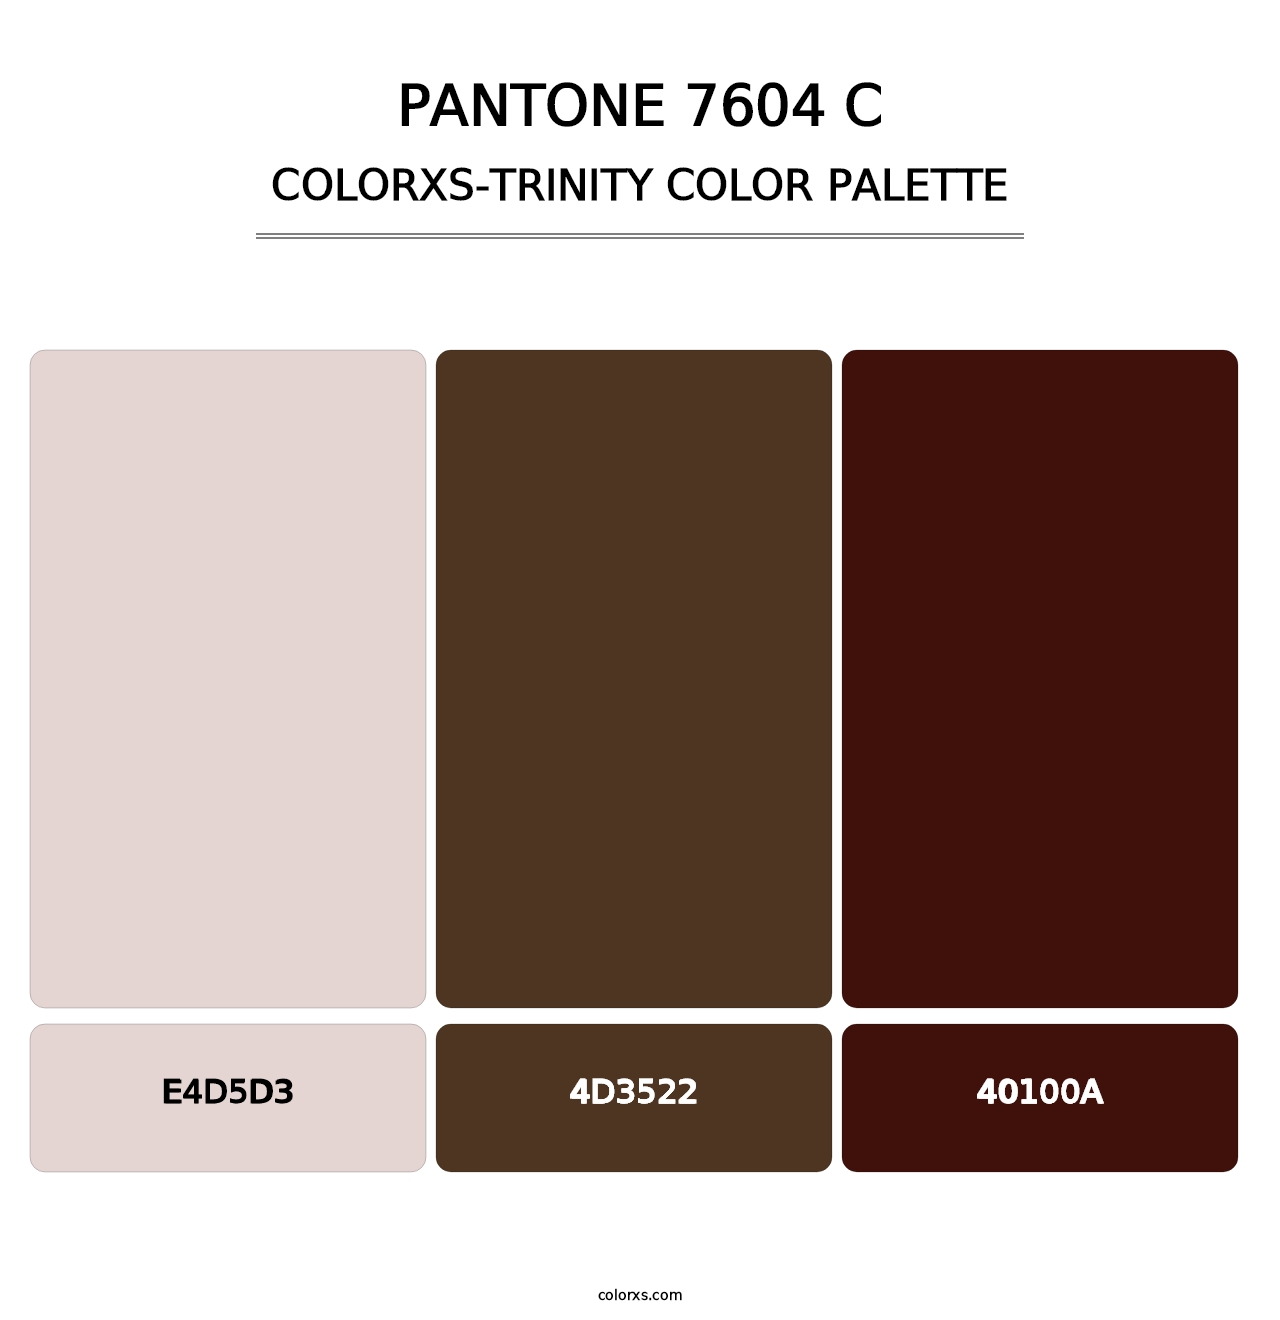 PANTONE 7604 C - Colorxs Trinity Palette